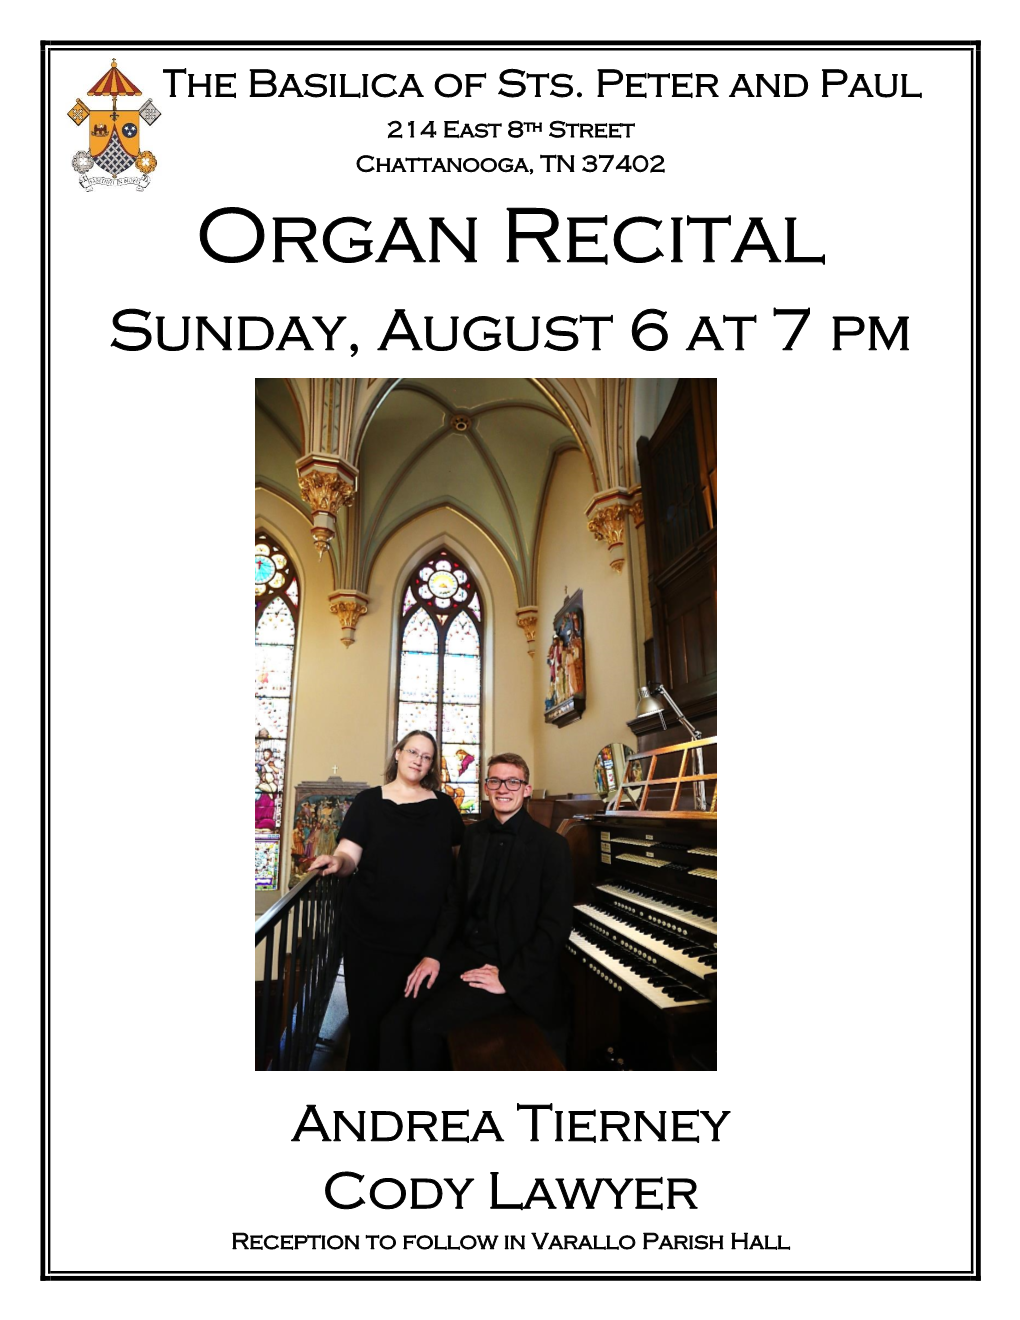 Organ Recital Sunday, August 6 at 7 Pm